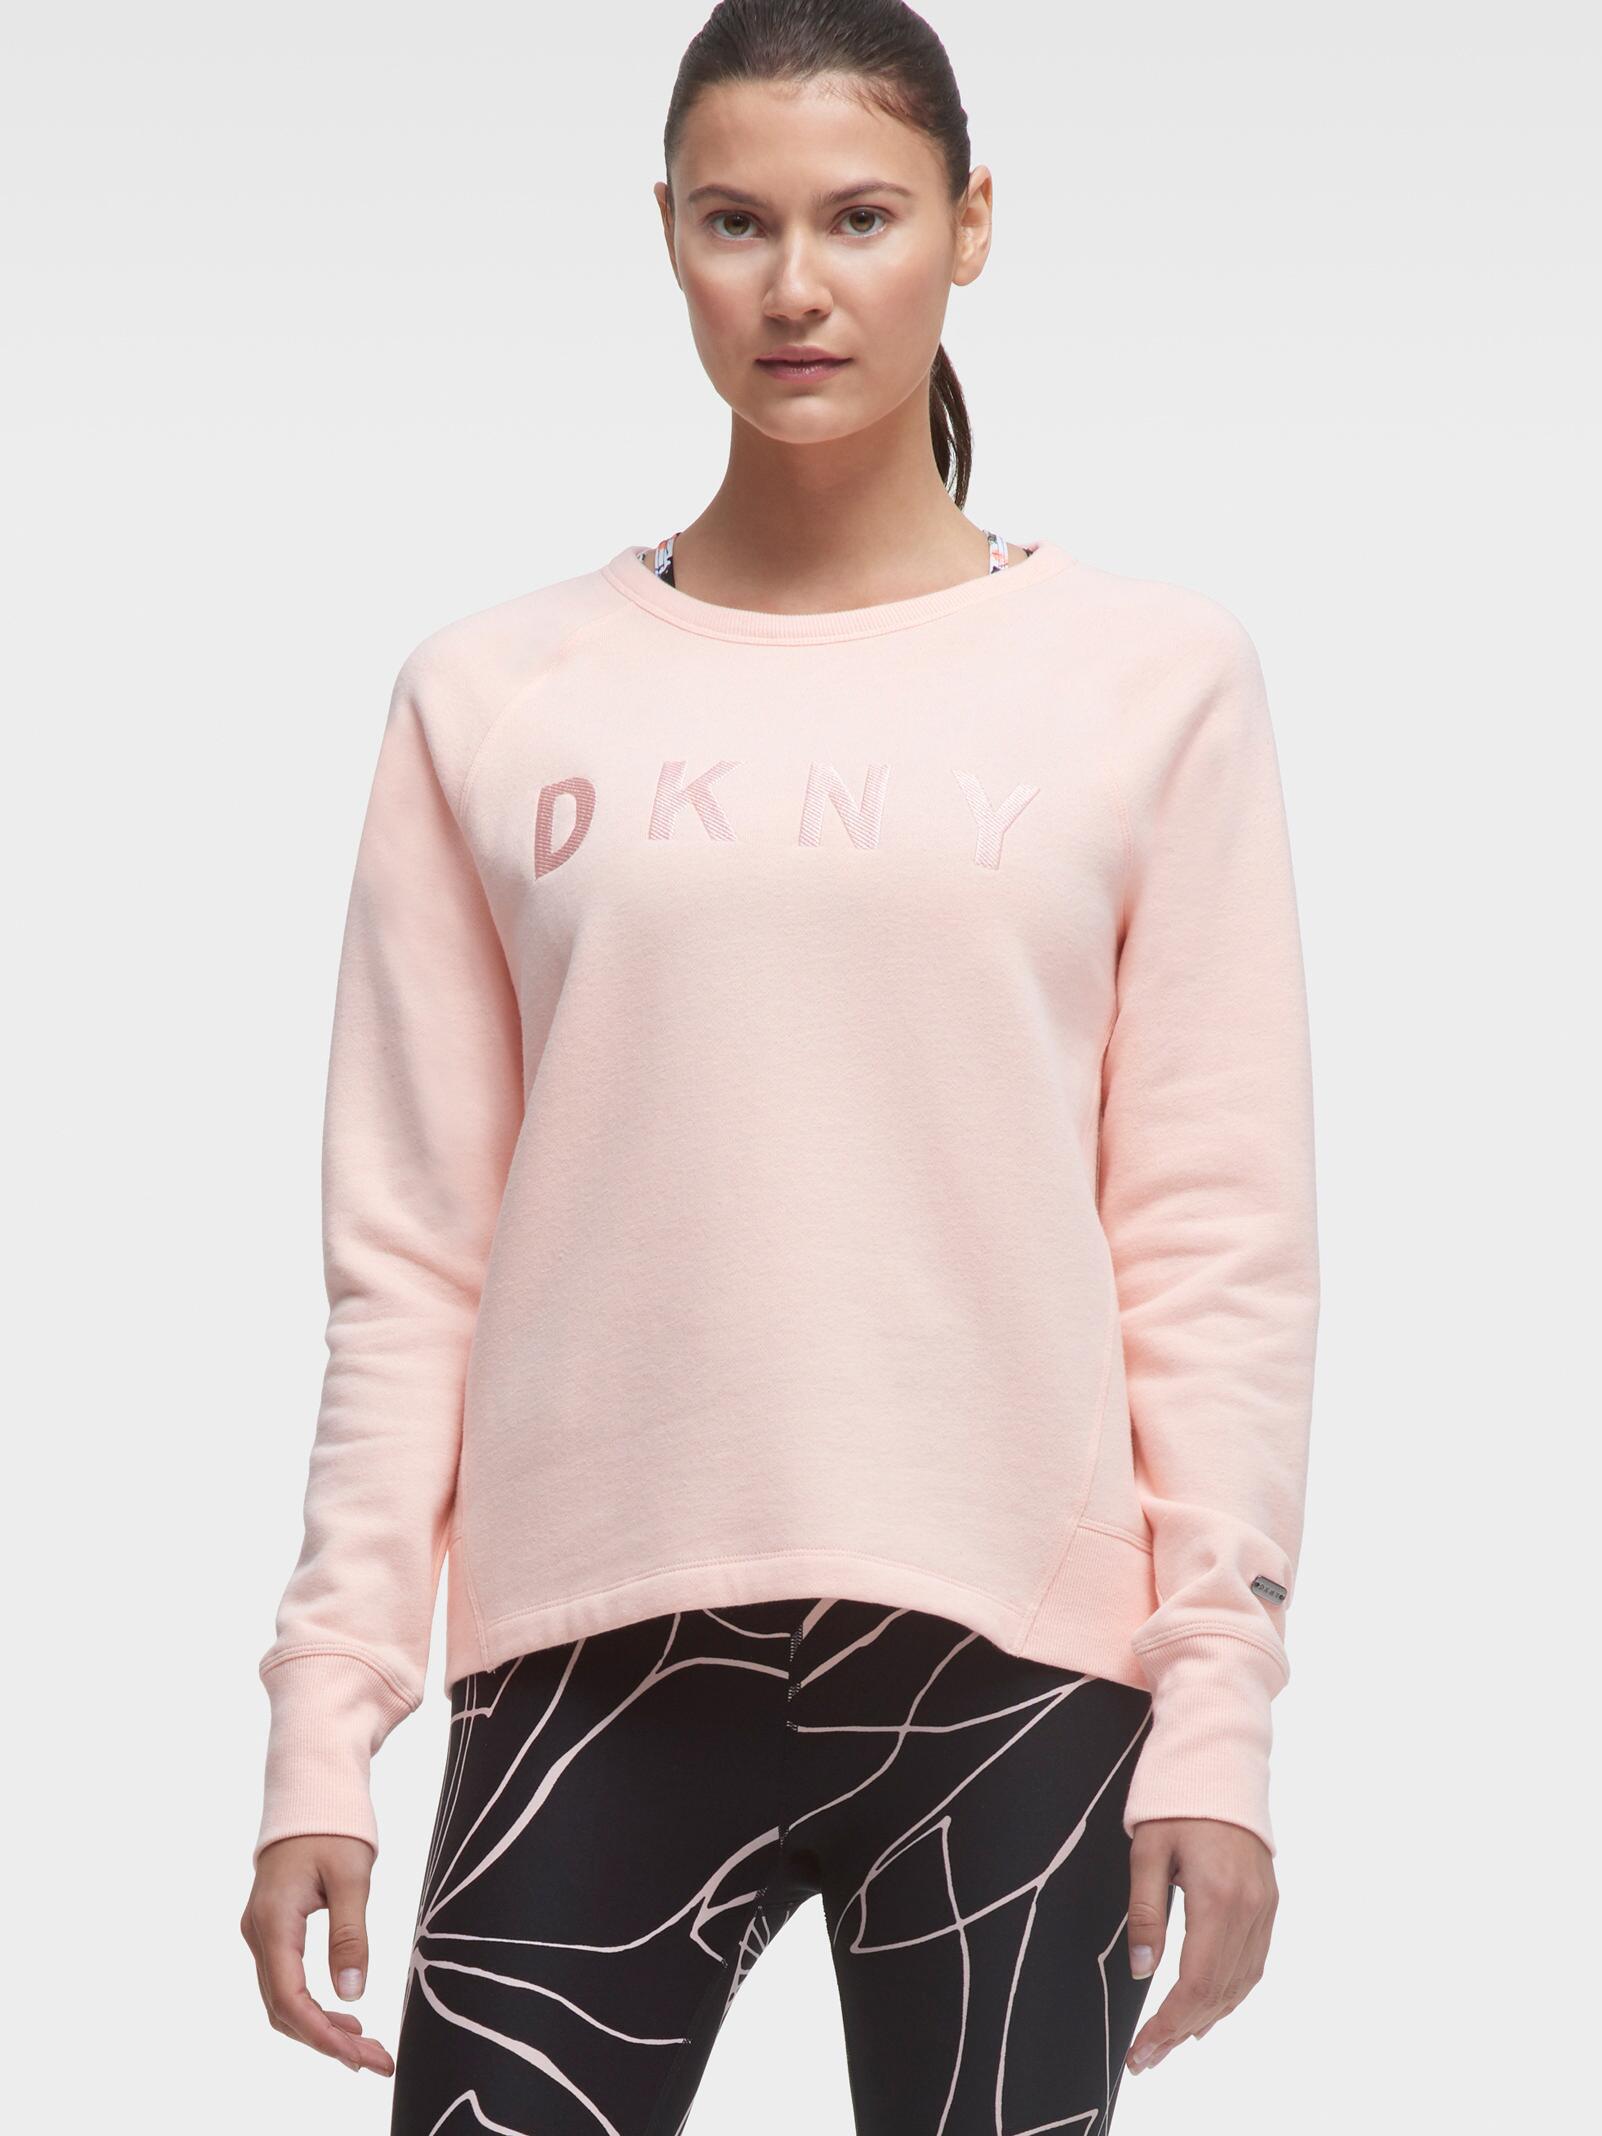 dkny pink sweatshirt